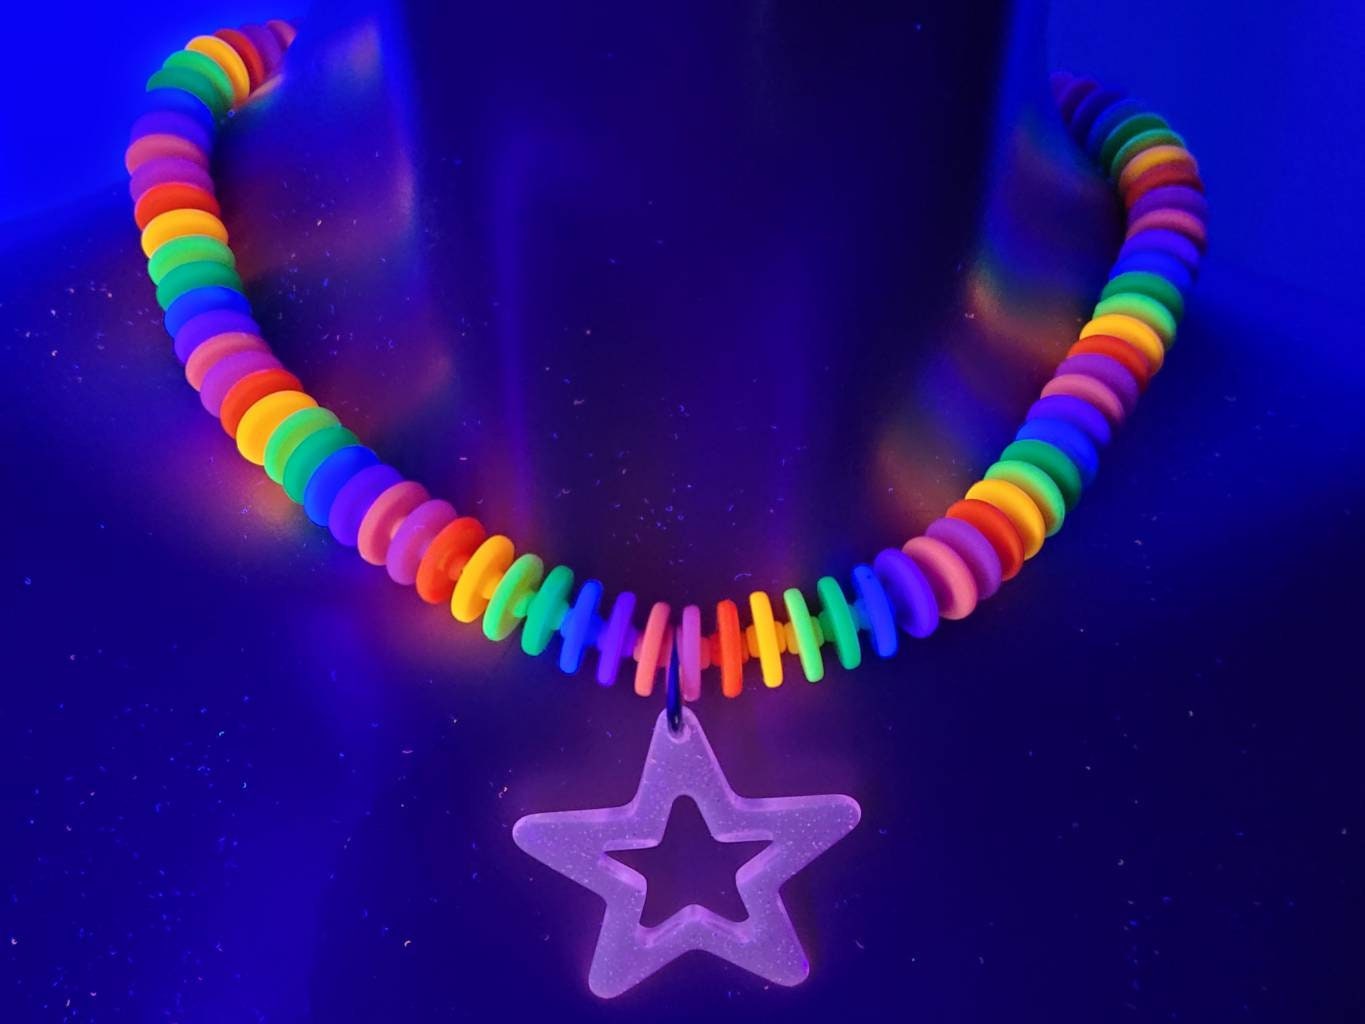 Acrylic Charm Necklace Kit - DIY Kawaii Kandi Rainbow Necklace